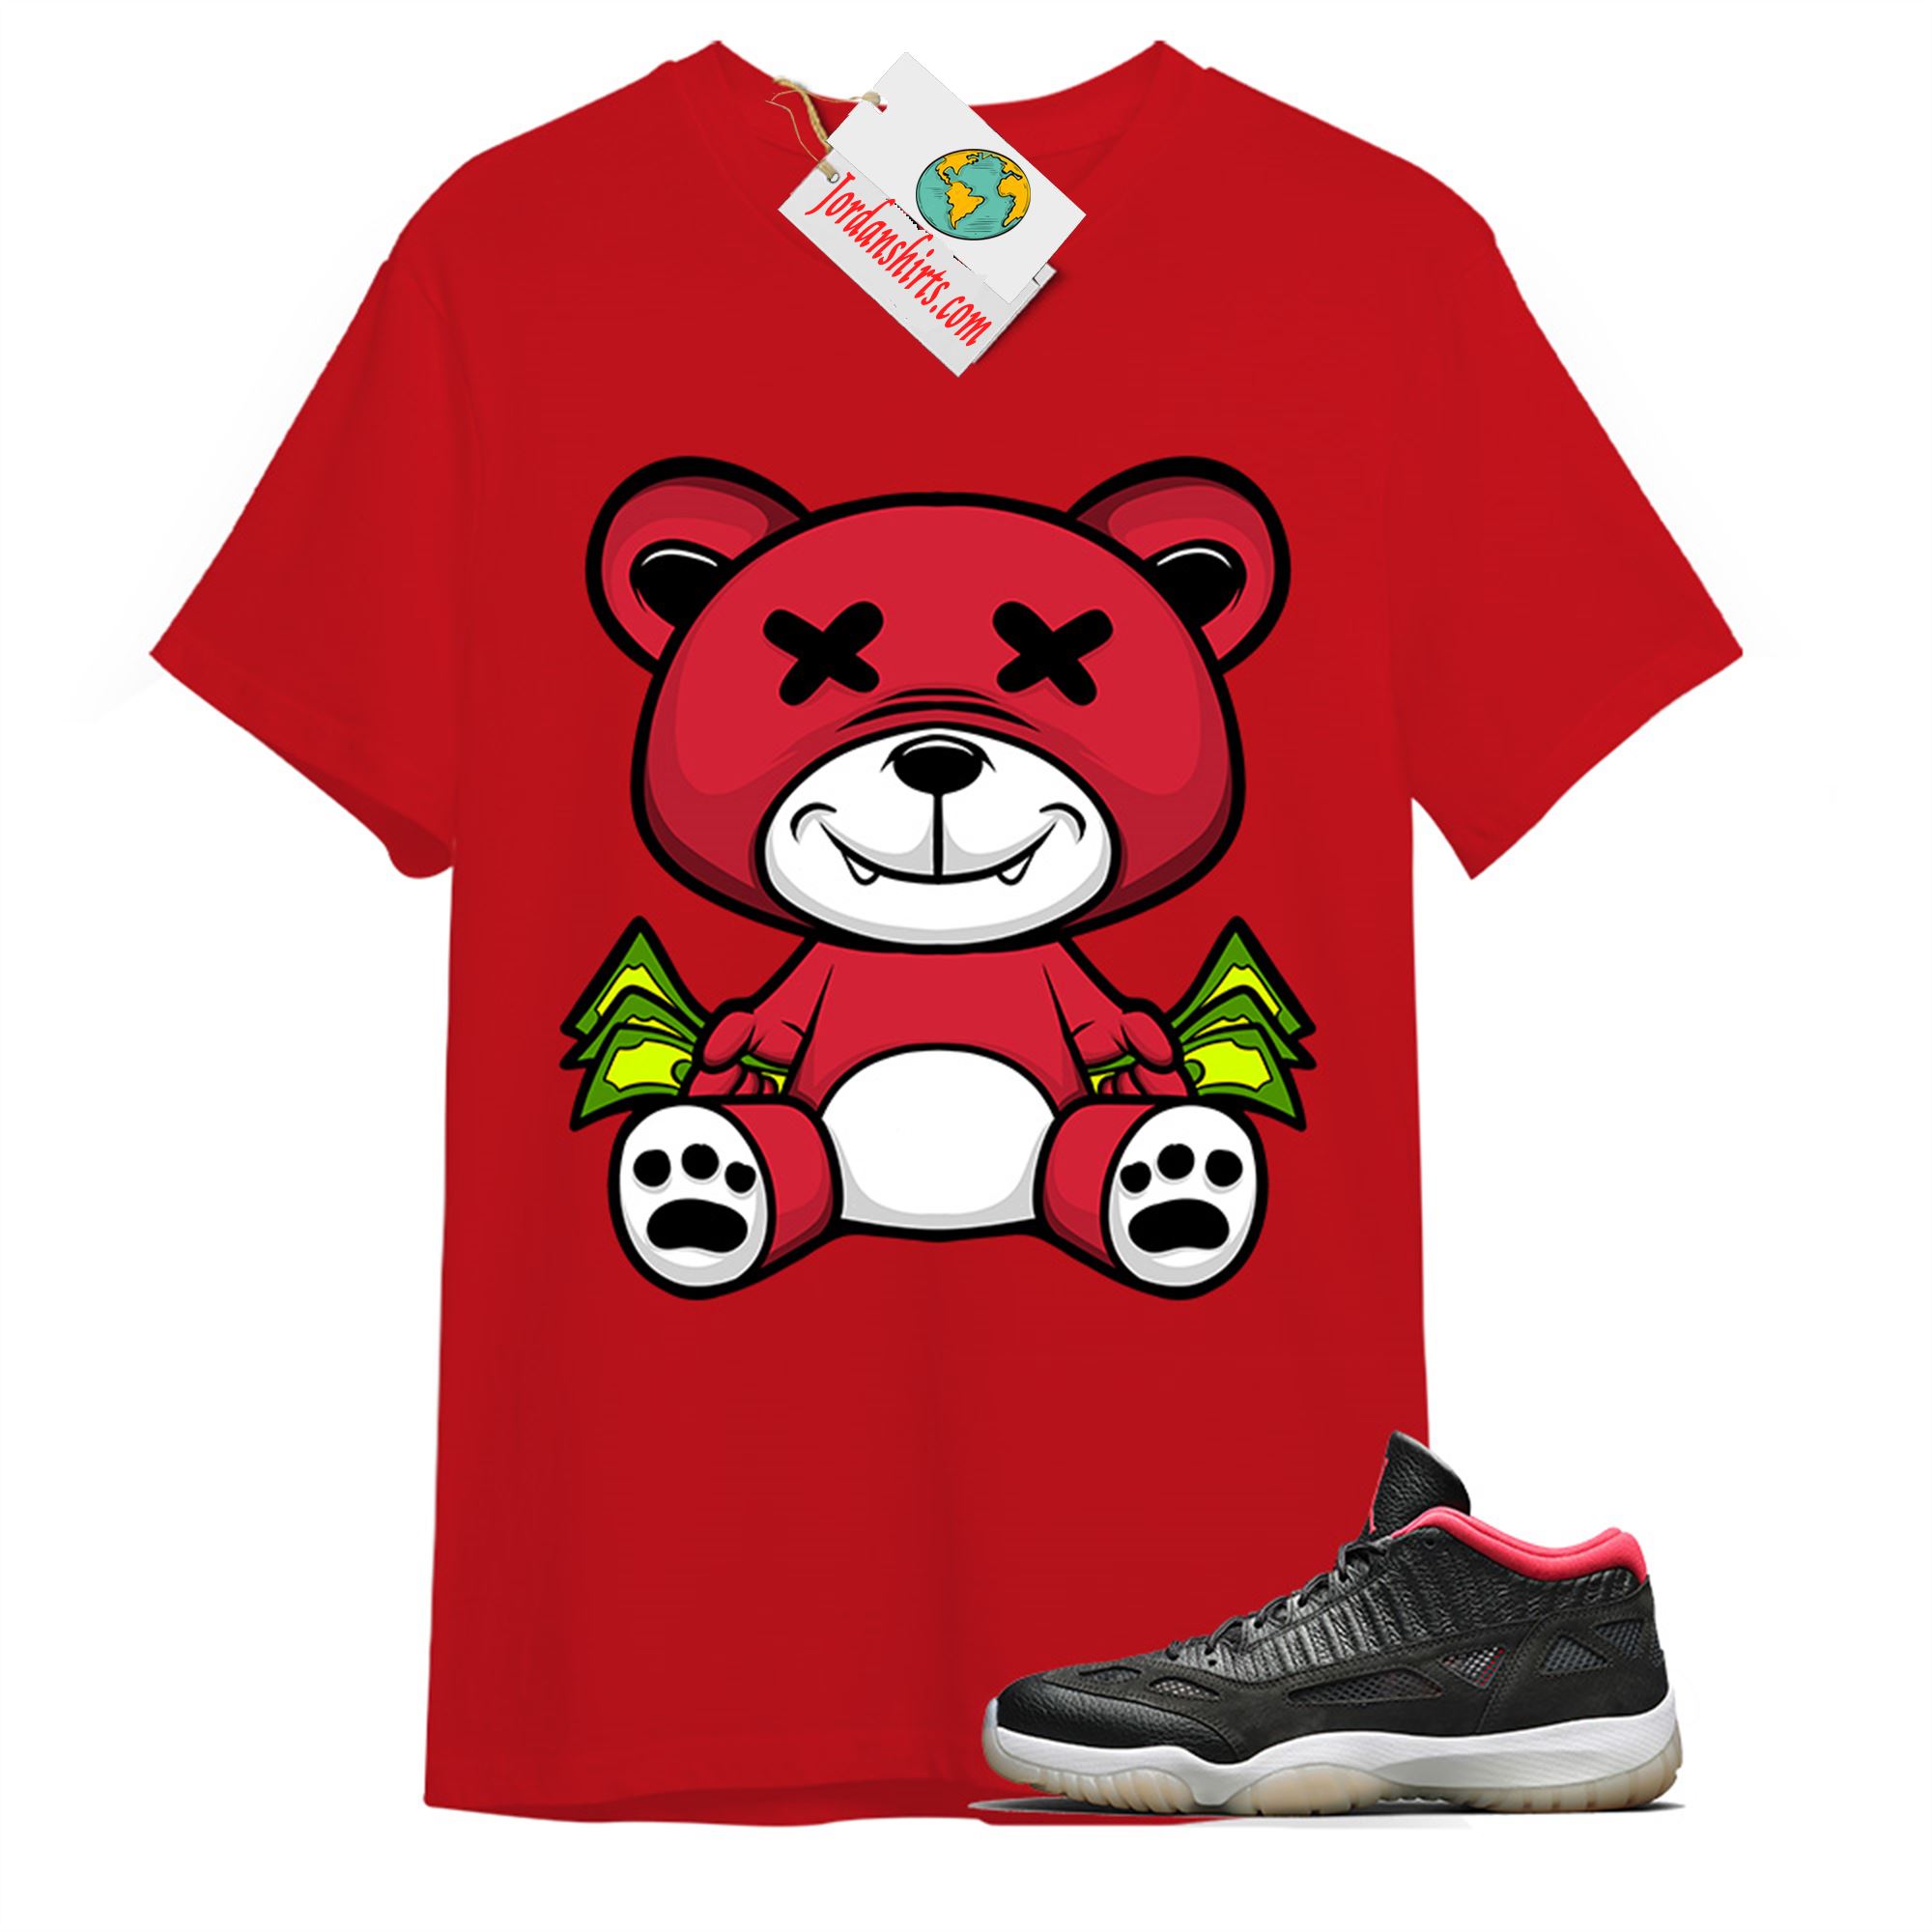 Jordan 11 Shirt, Rich Teddy Bear Red T-shirt Air Jordan 11 Bred 11s Full Size Up To 5xl